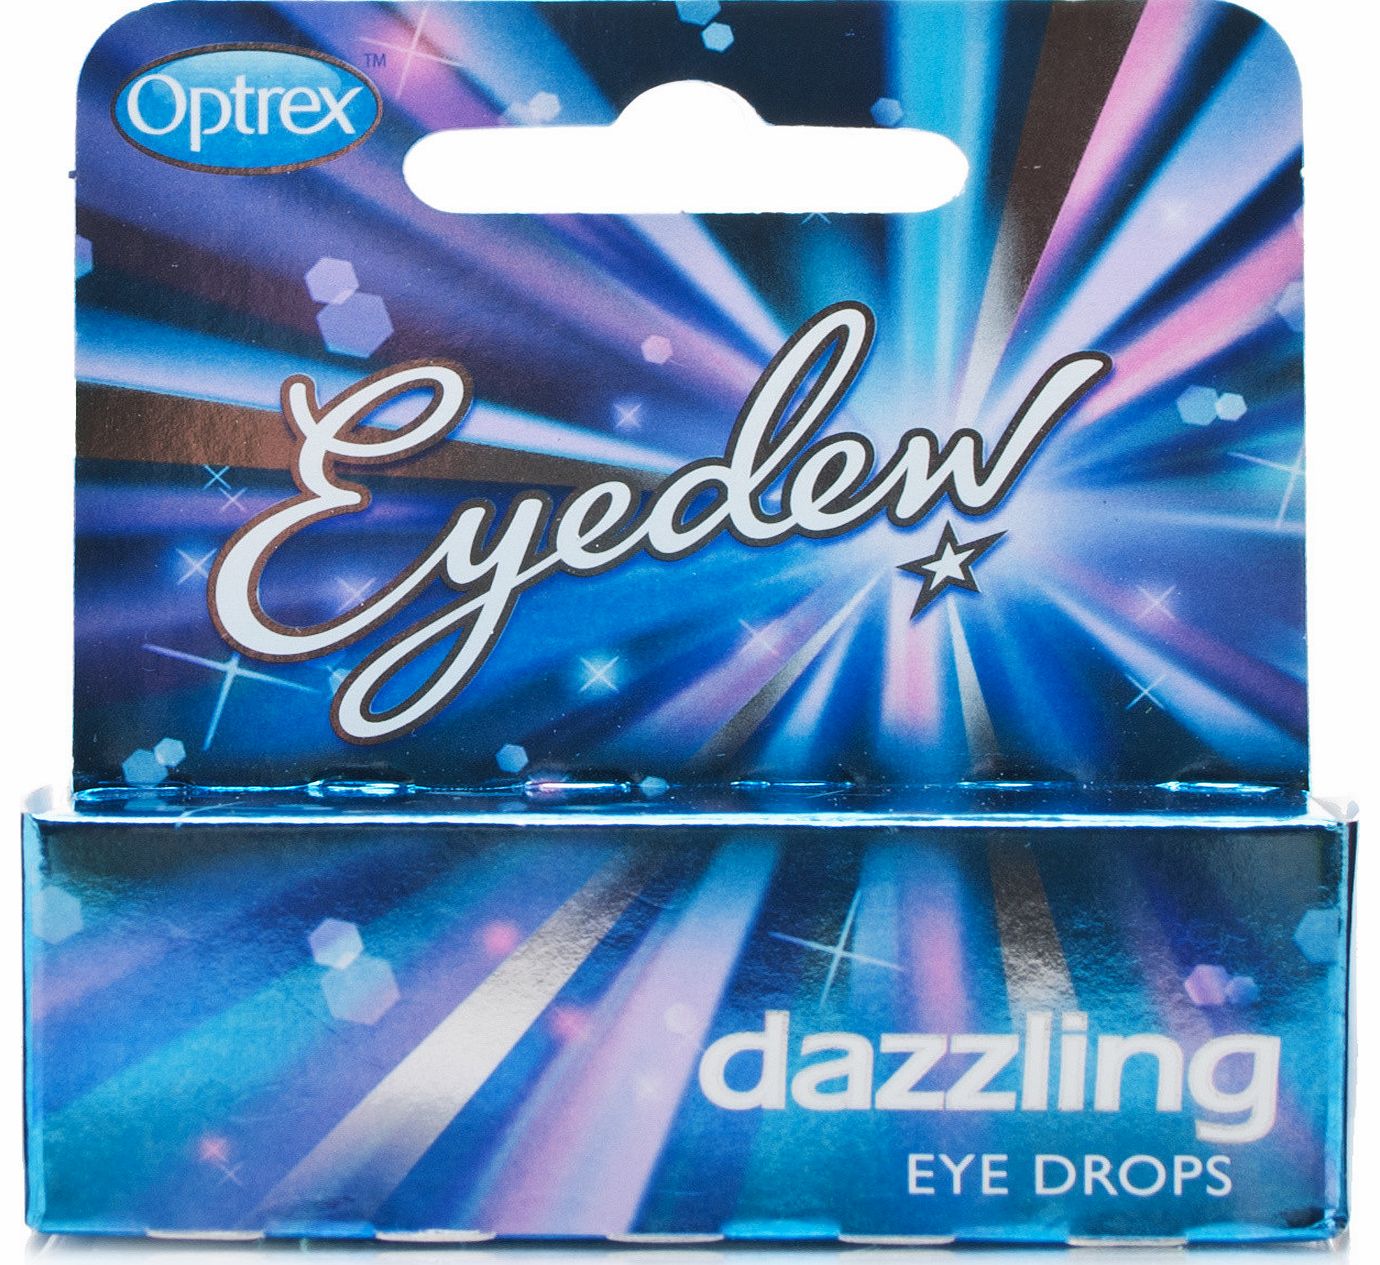 Optrex Eyedew Dazzling Blue Eye Drops